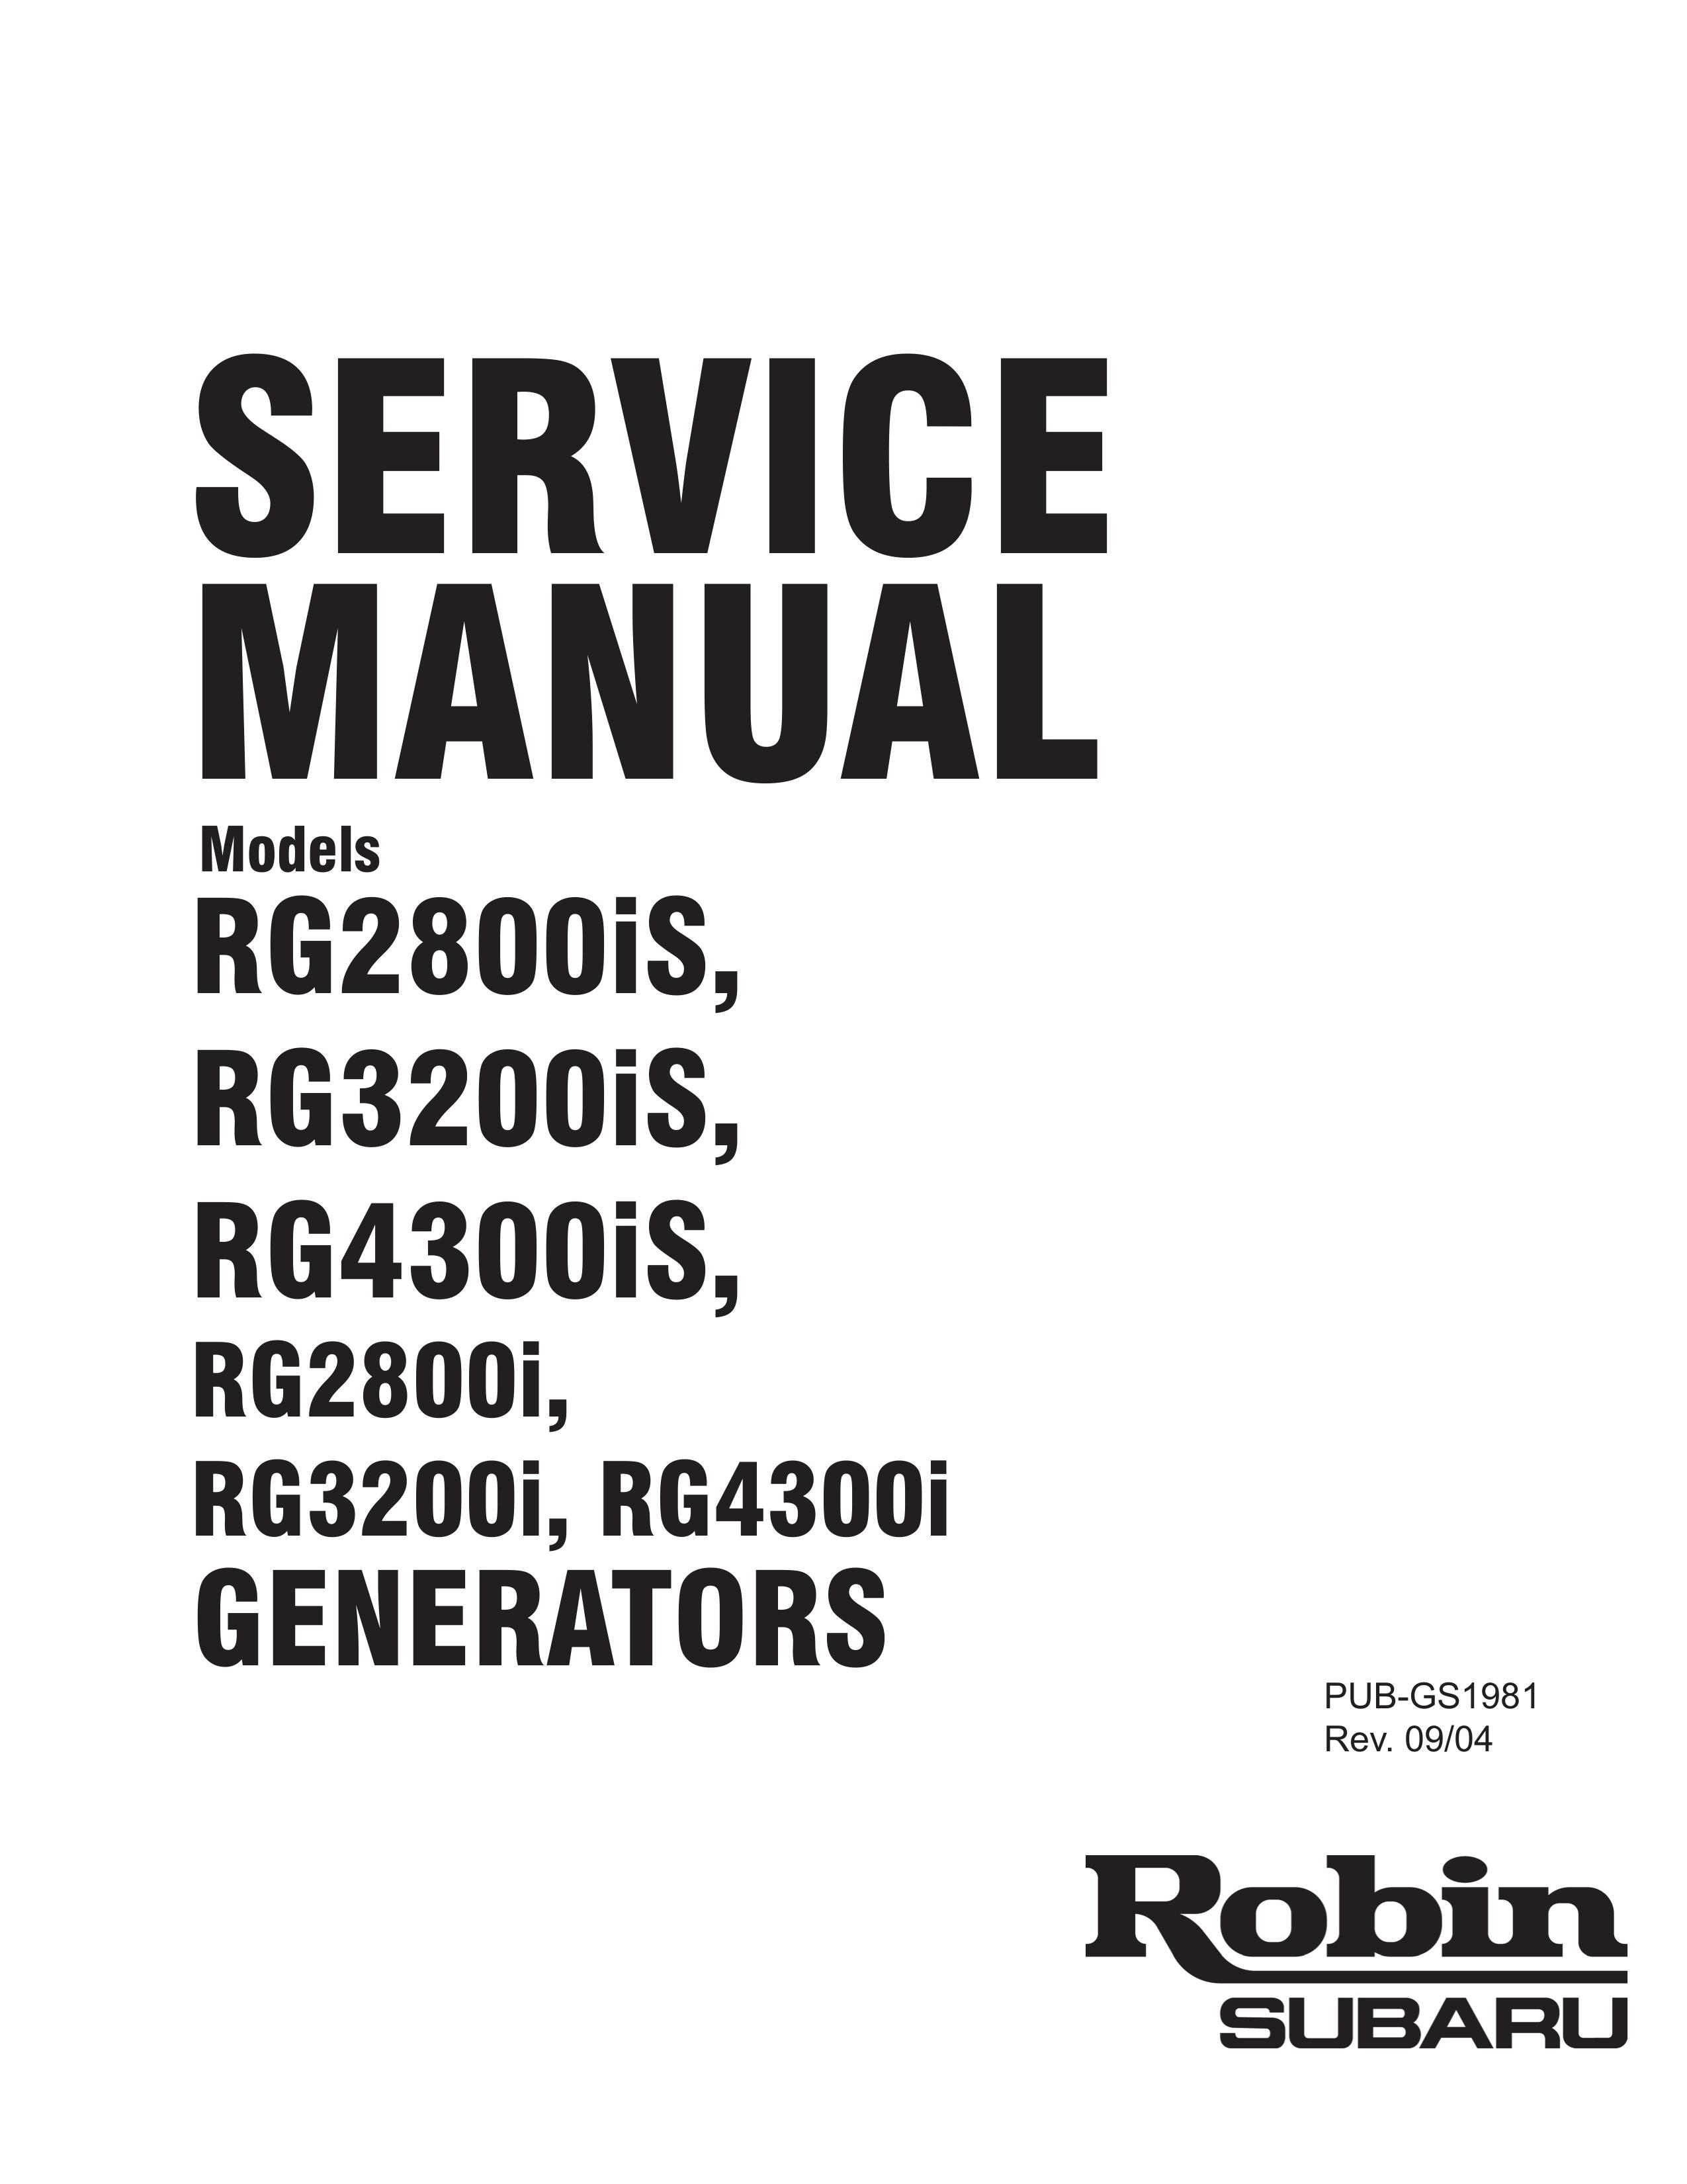 Subaru Robin Power Products RG2800I Portable Generator User Manual